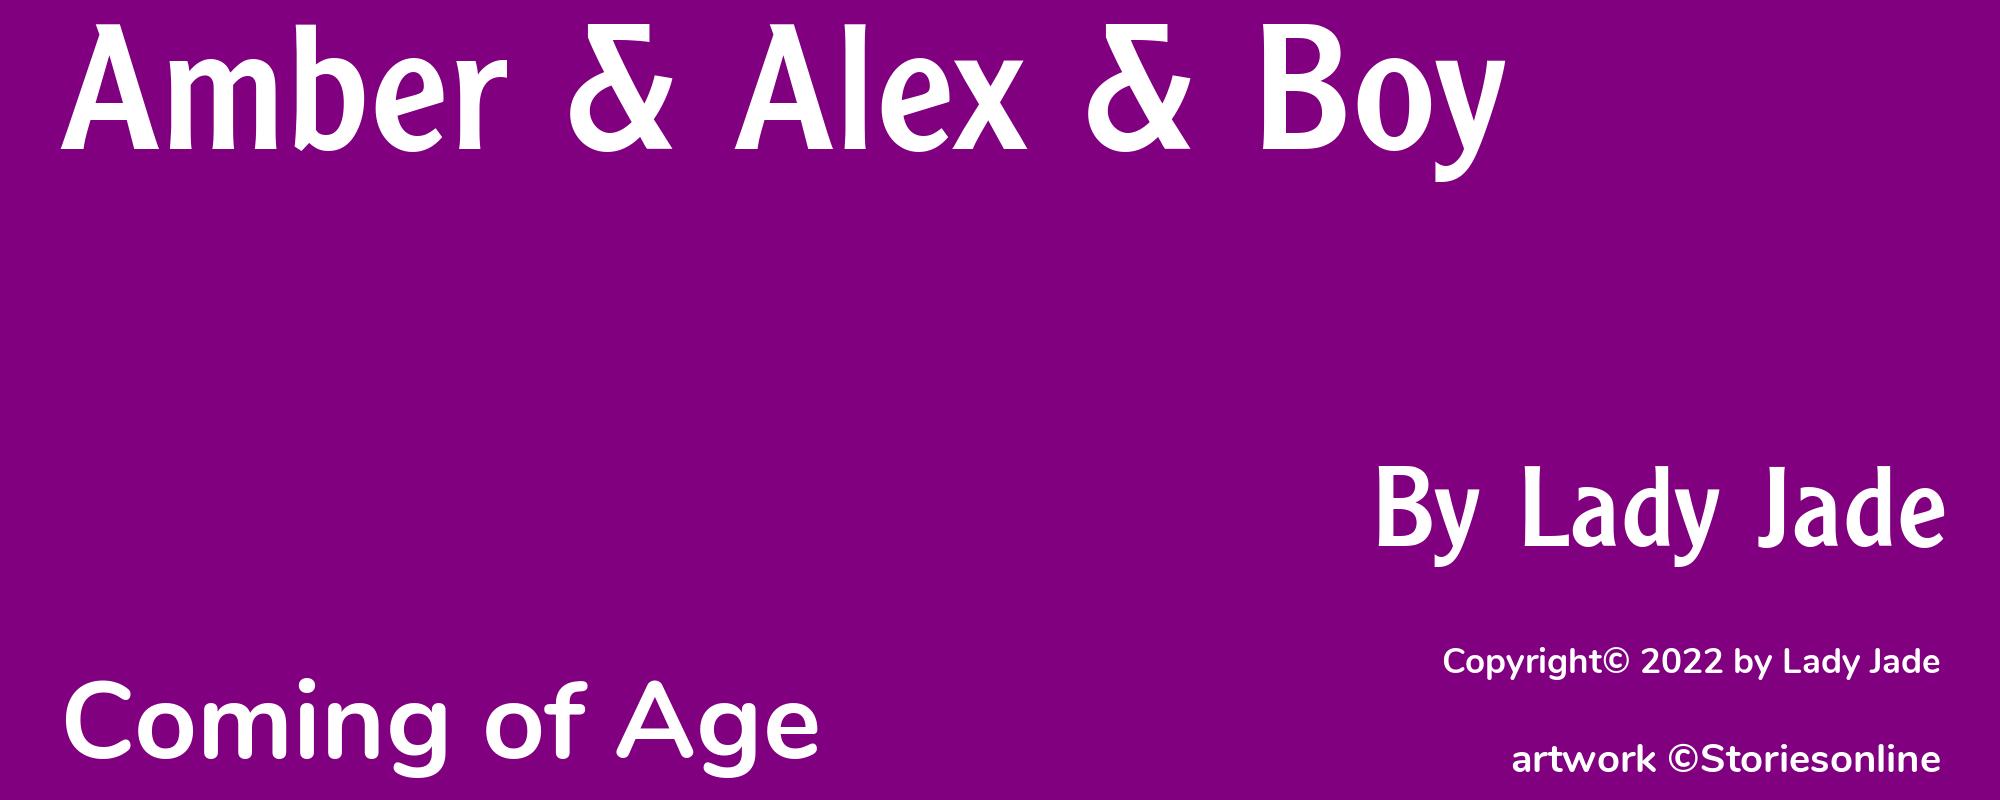 Amber & Alex & Boy - Cover